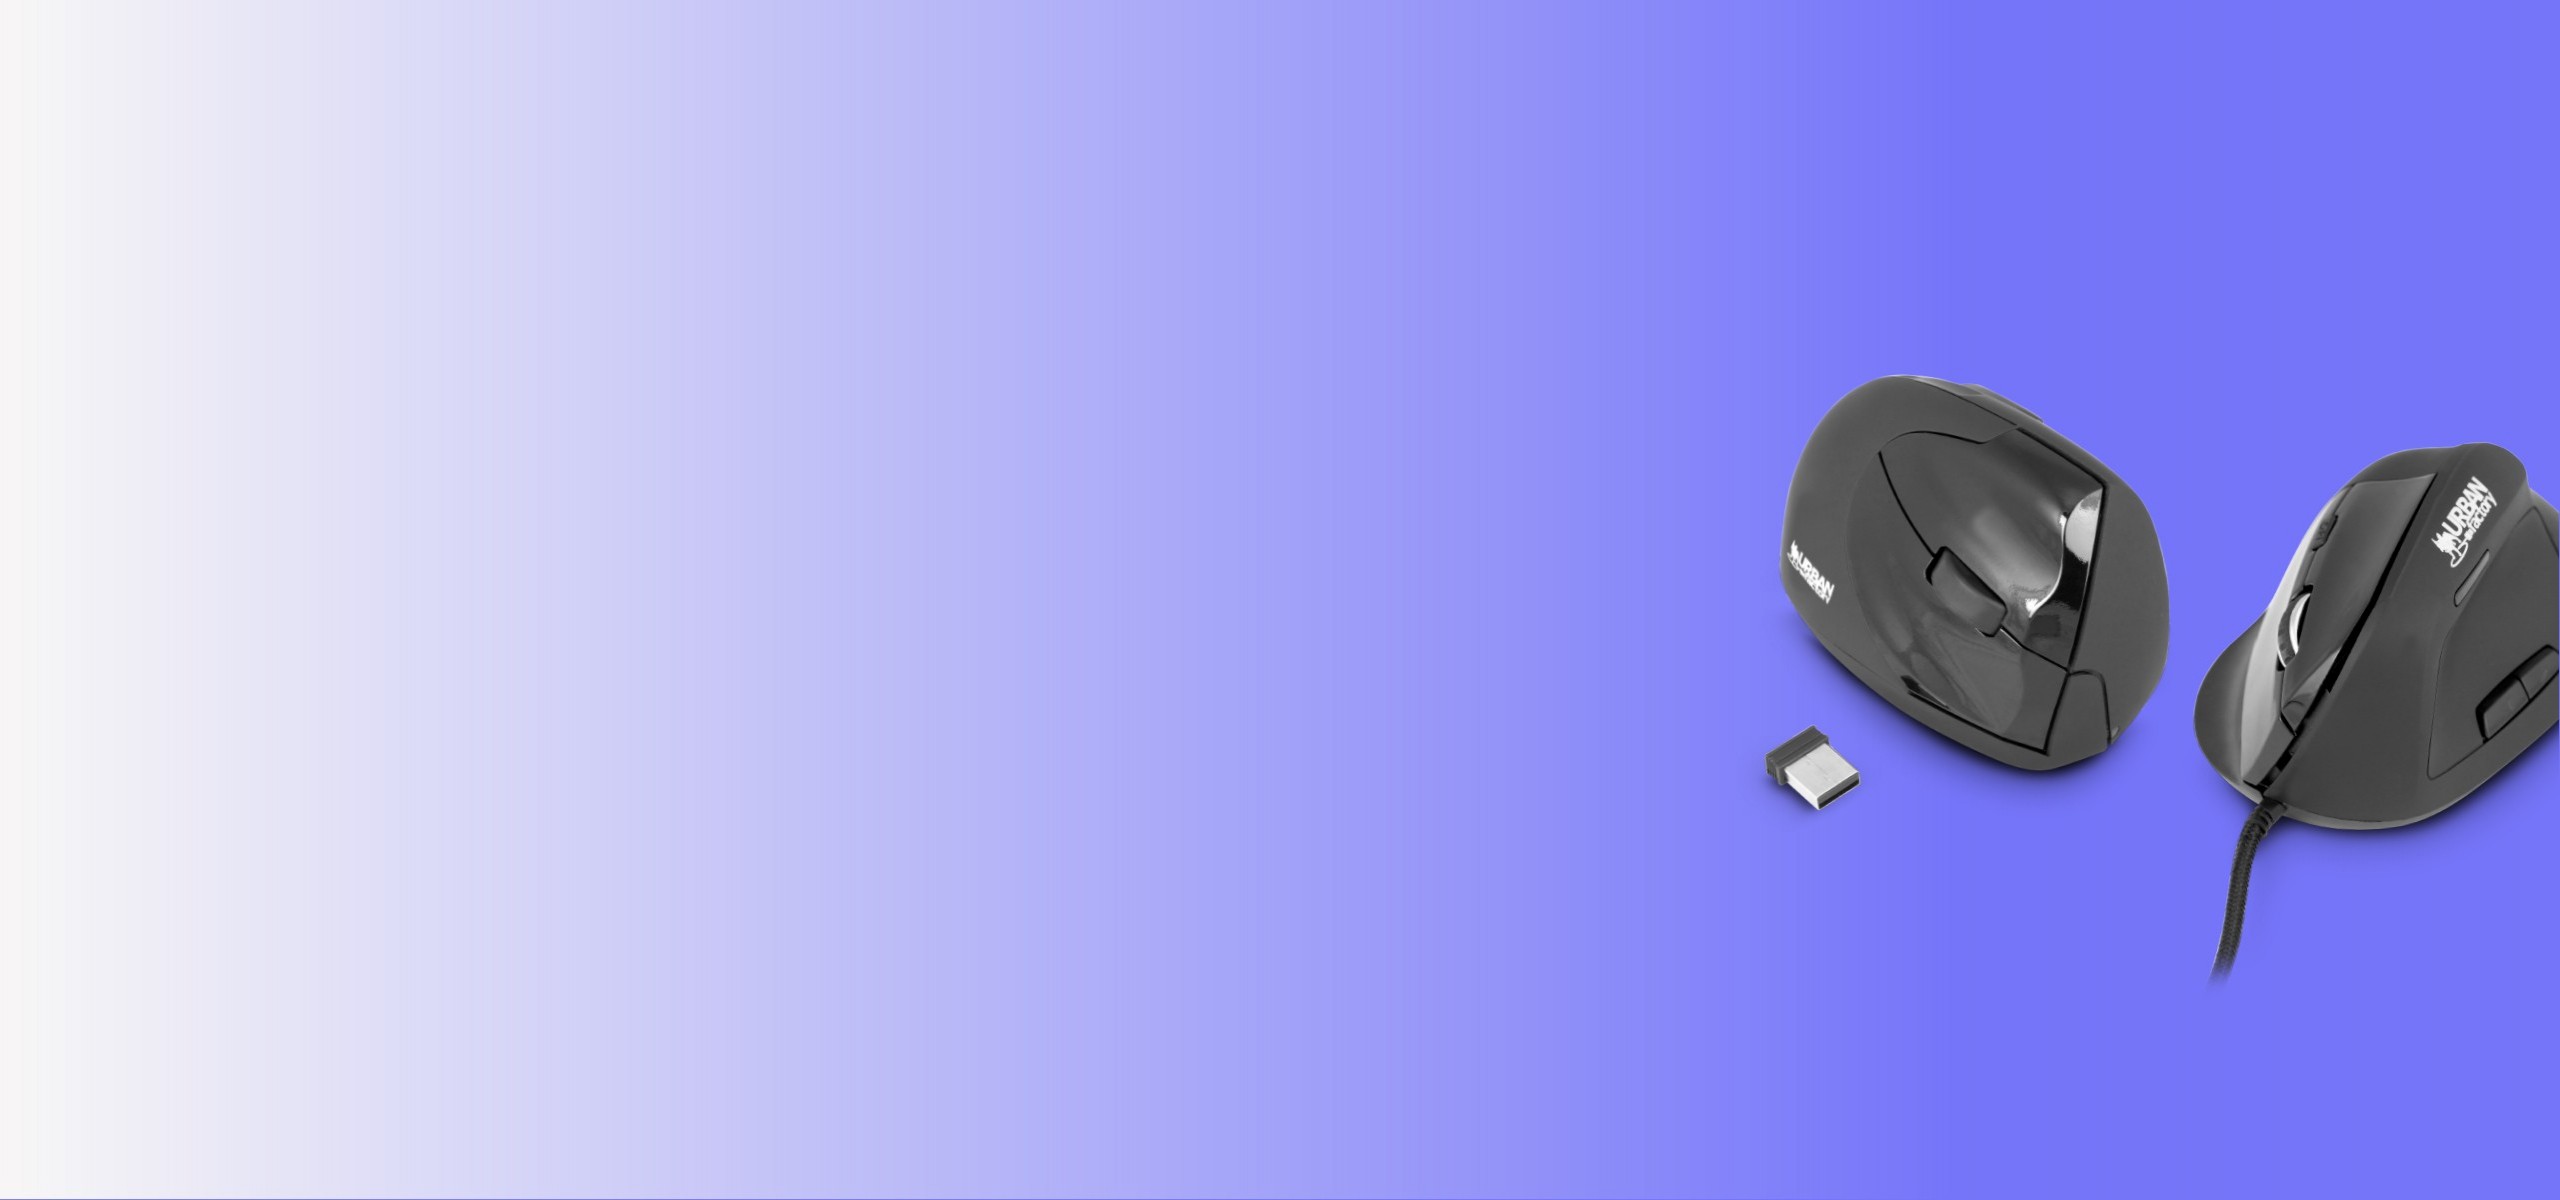 USB ergonomic mouse